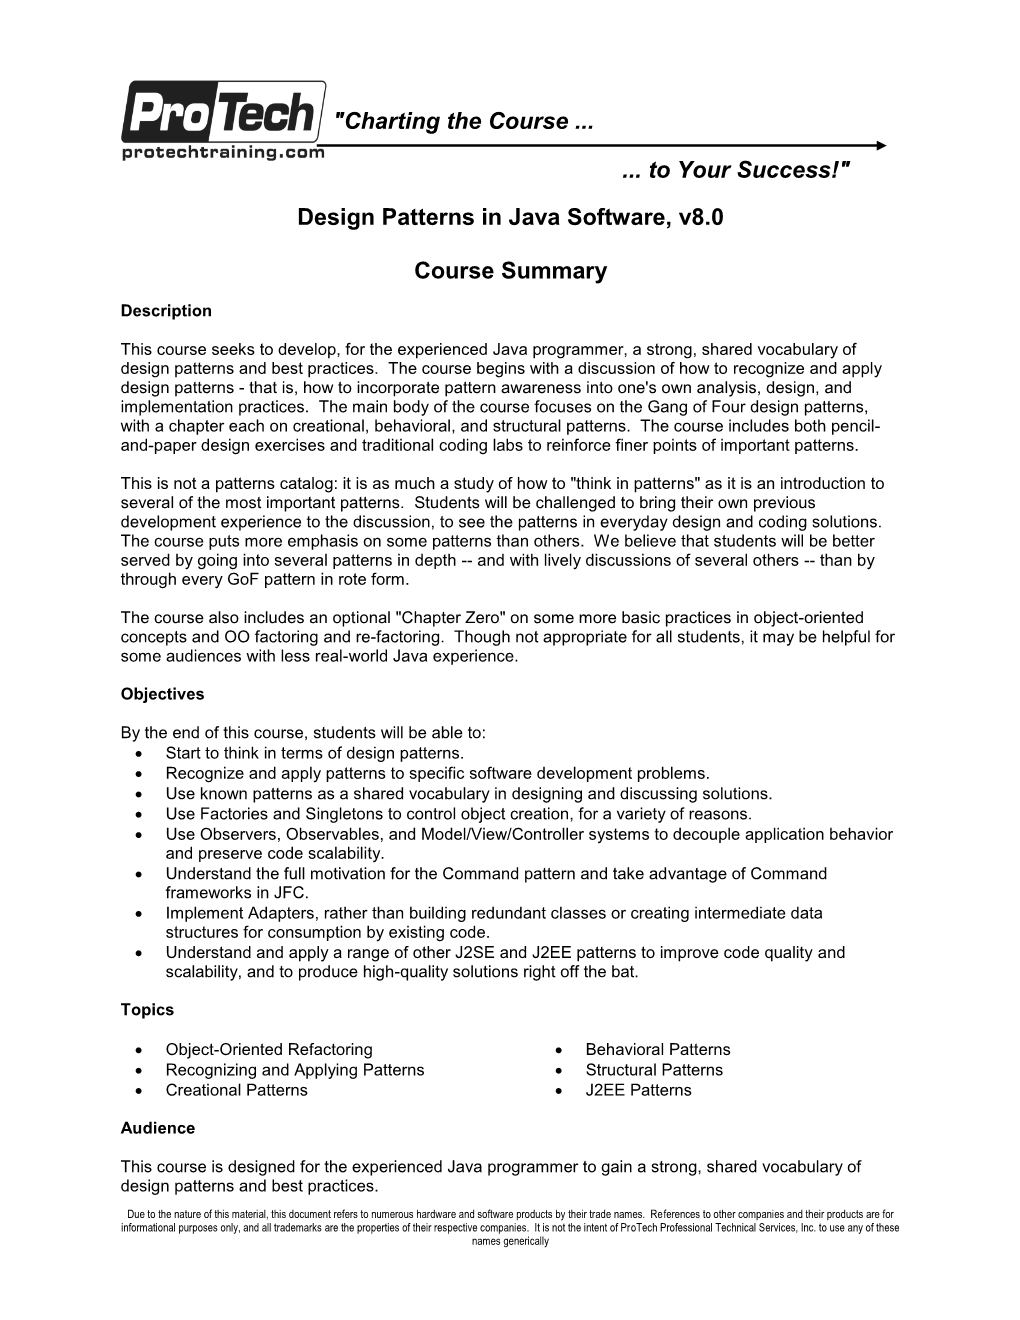 Design Patterns in Java Software, Version